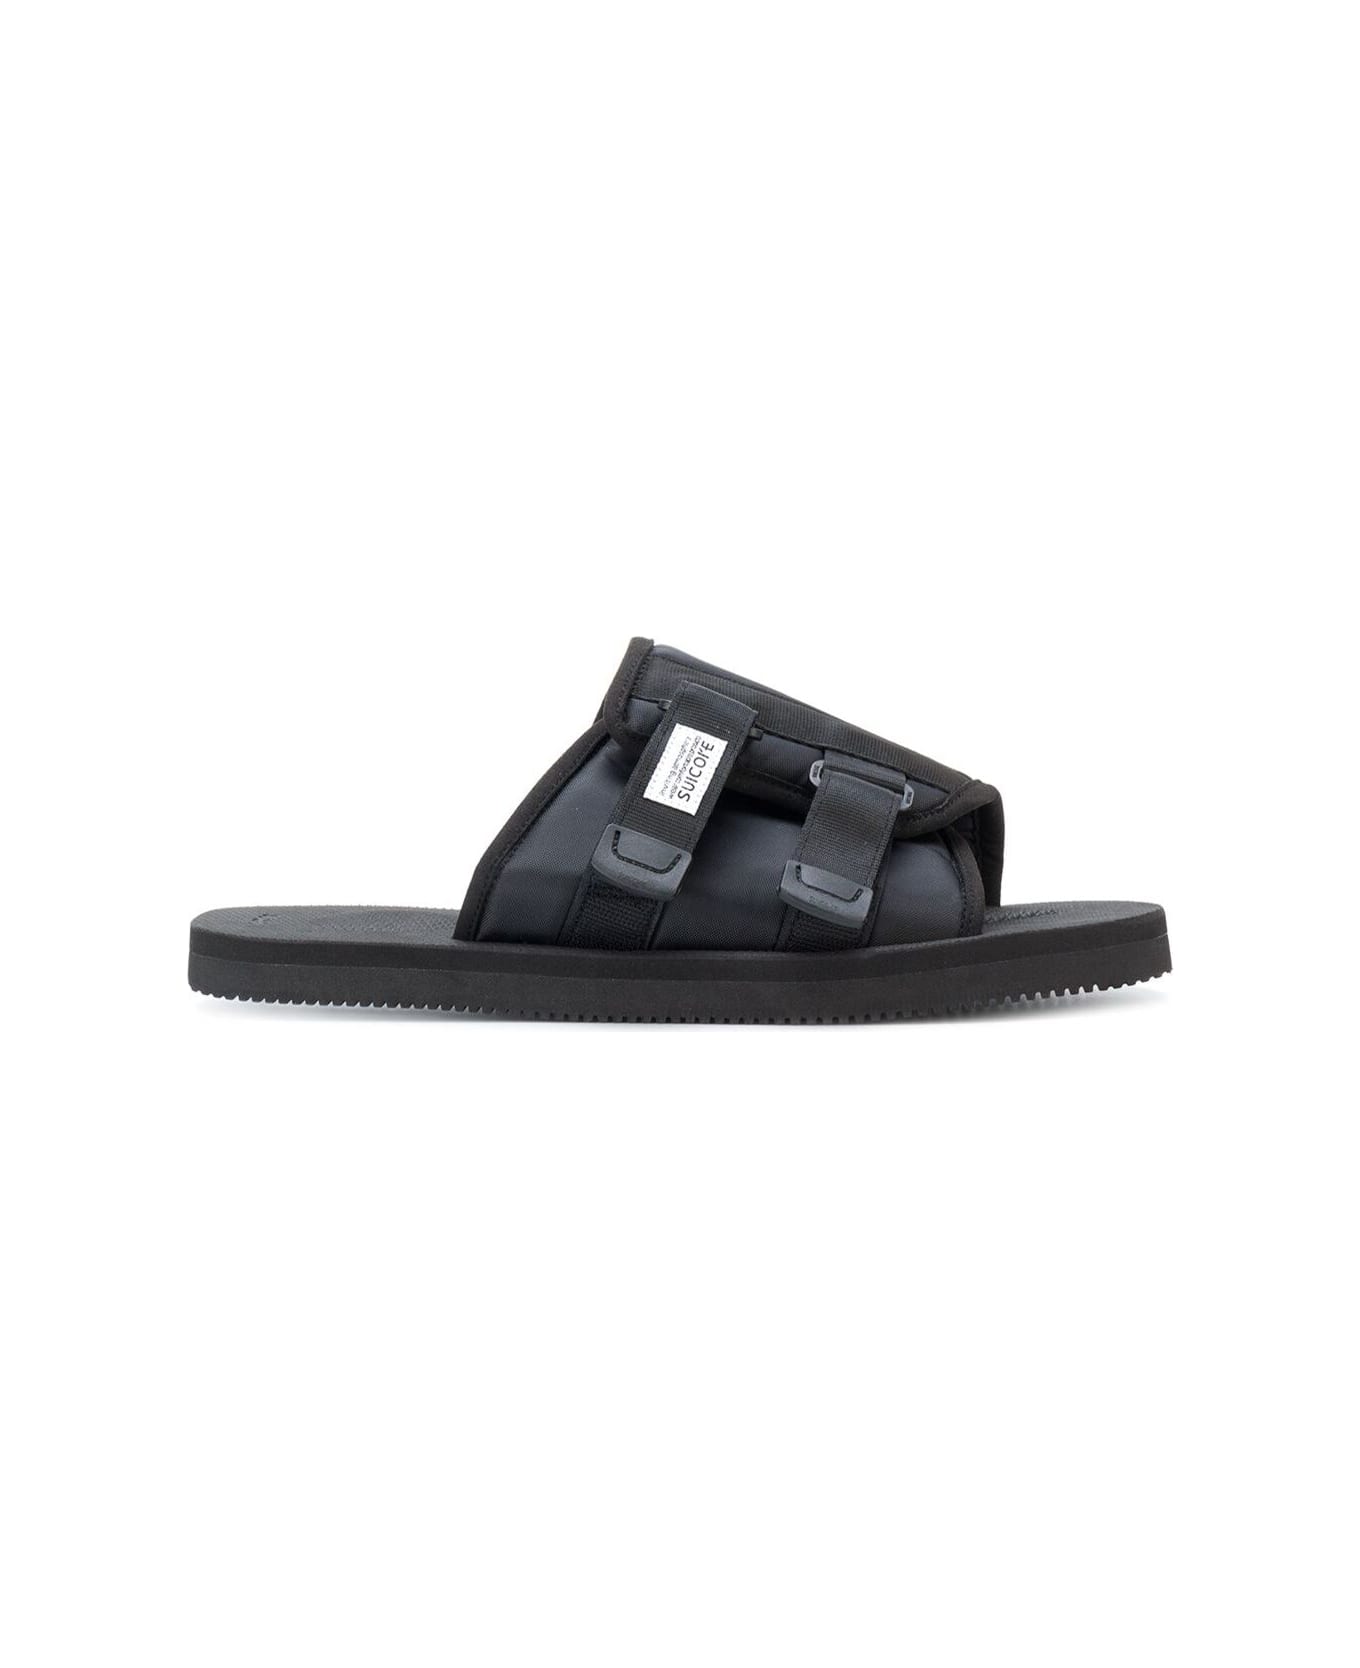 SUICOKE 'kaw-cab' Black Sandals With Velcro Fastening In Nylon Woman Suicoke - Black サンダル